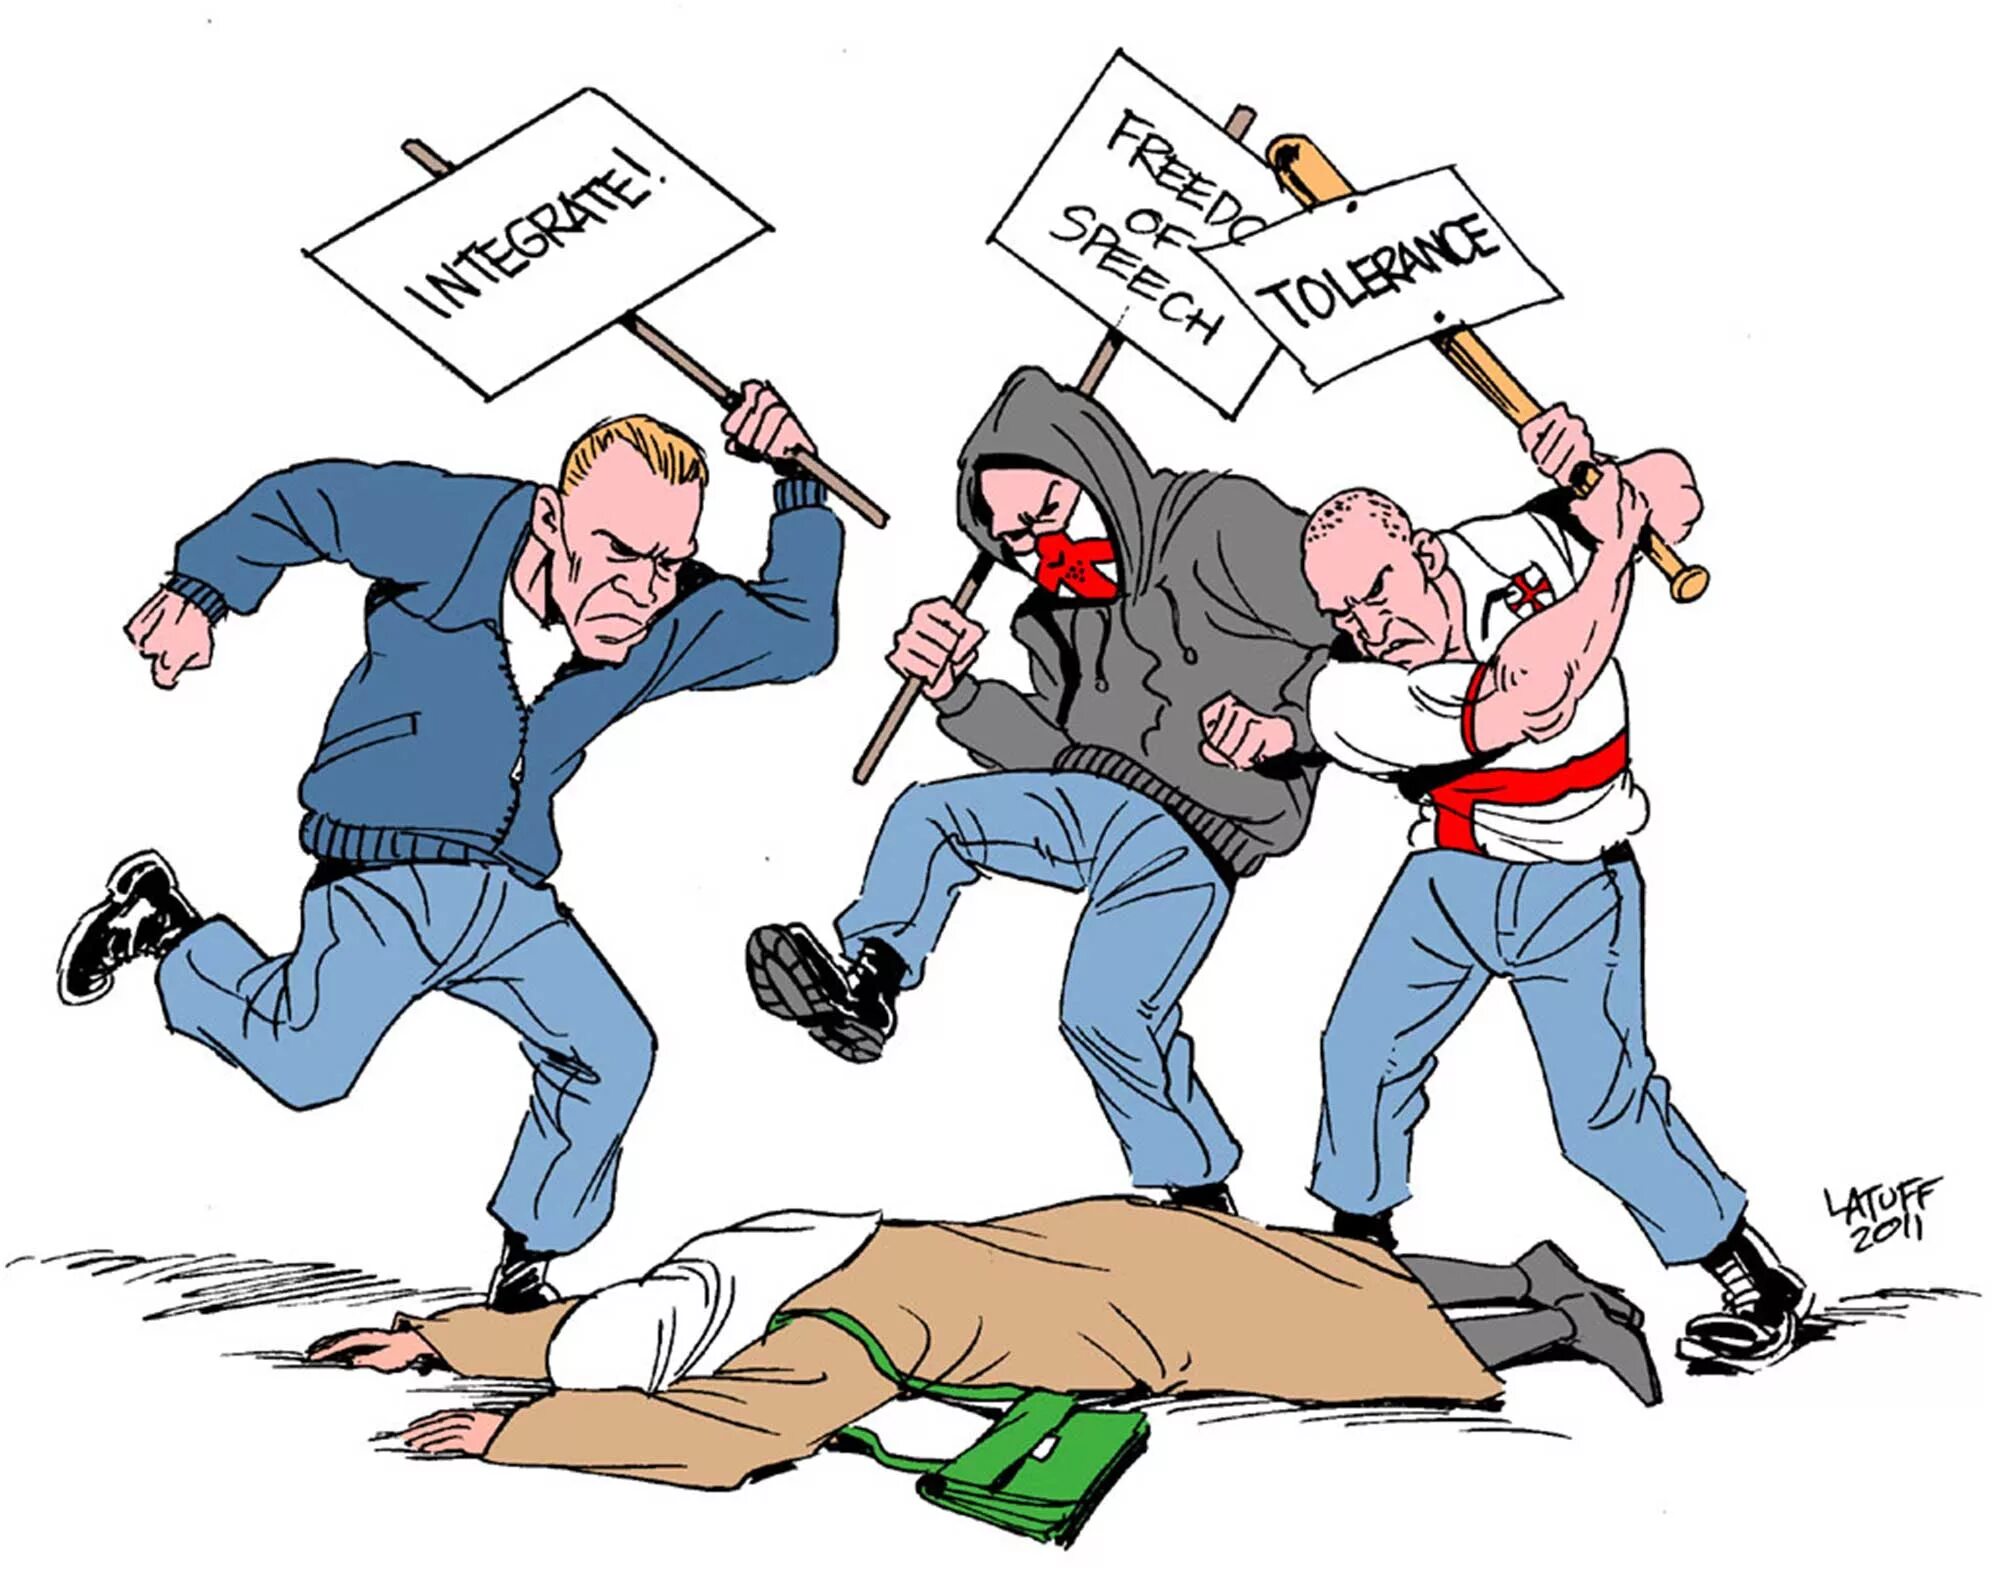 Религиозный конфликт карикатуры. Карикатура против Ислама. Дискриминация карикатура. Преступность карикатура. Конфликт конфликту рознь